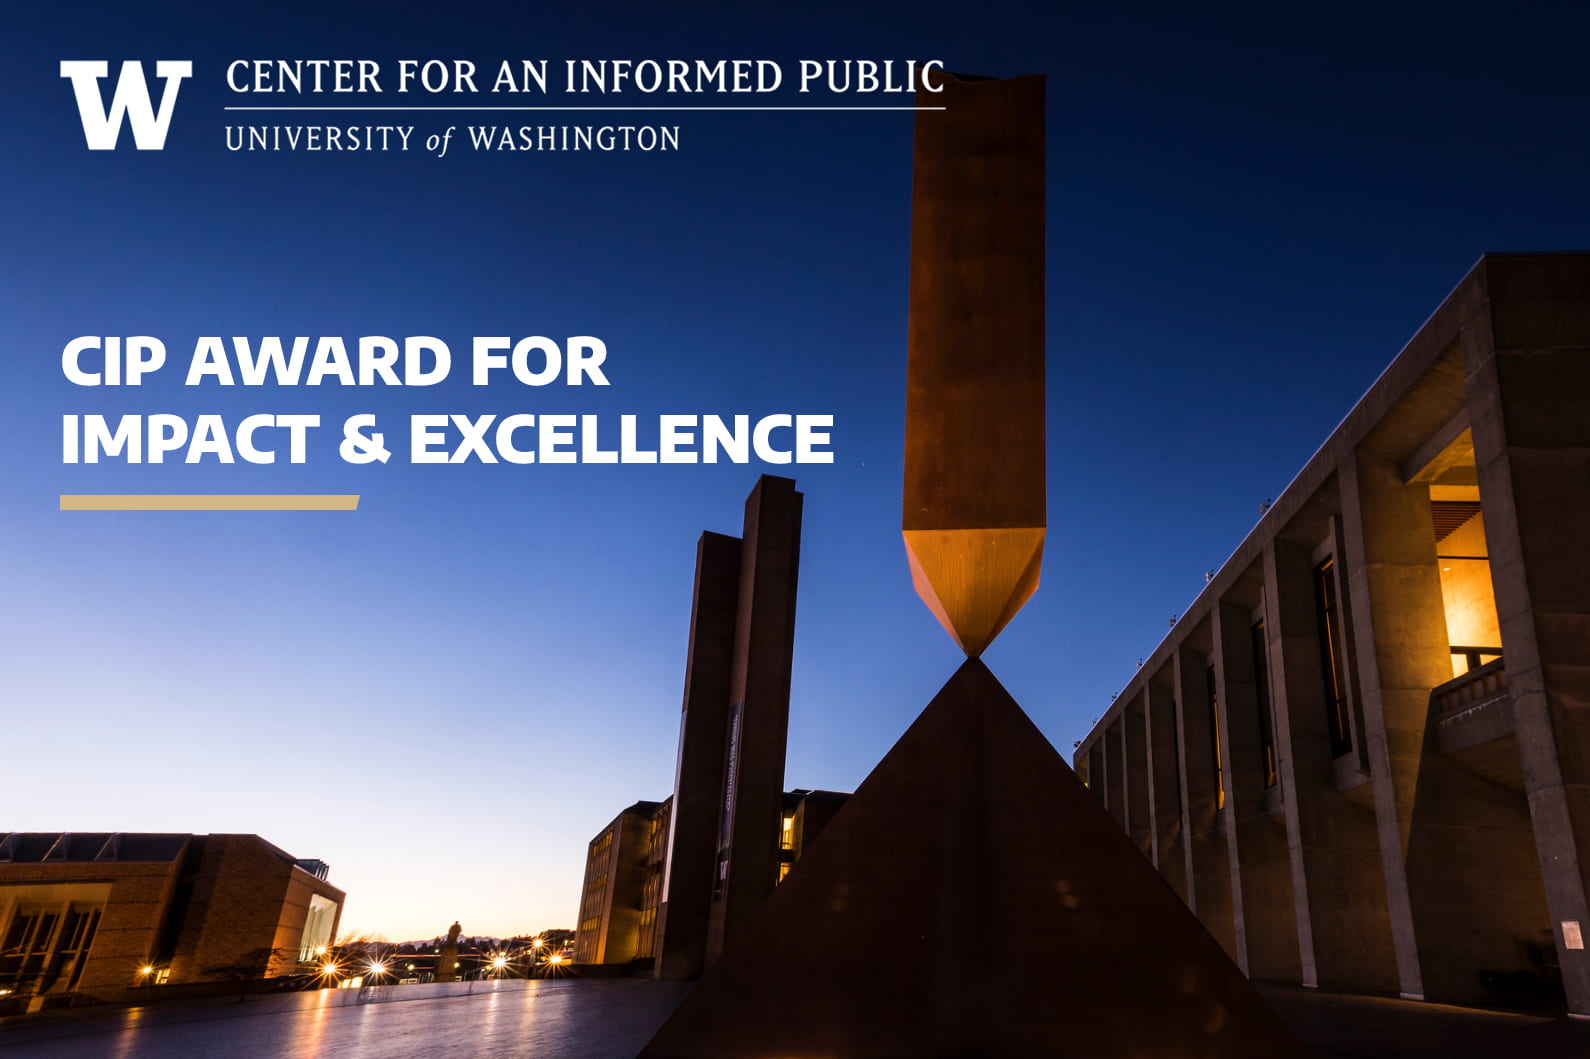 CIP Award for Impact & Excellence